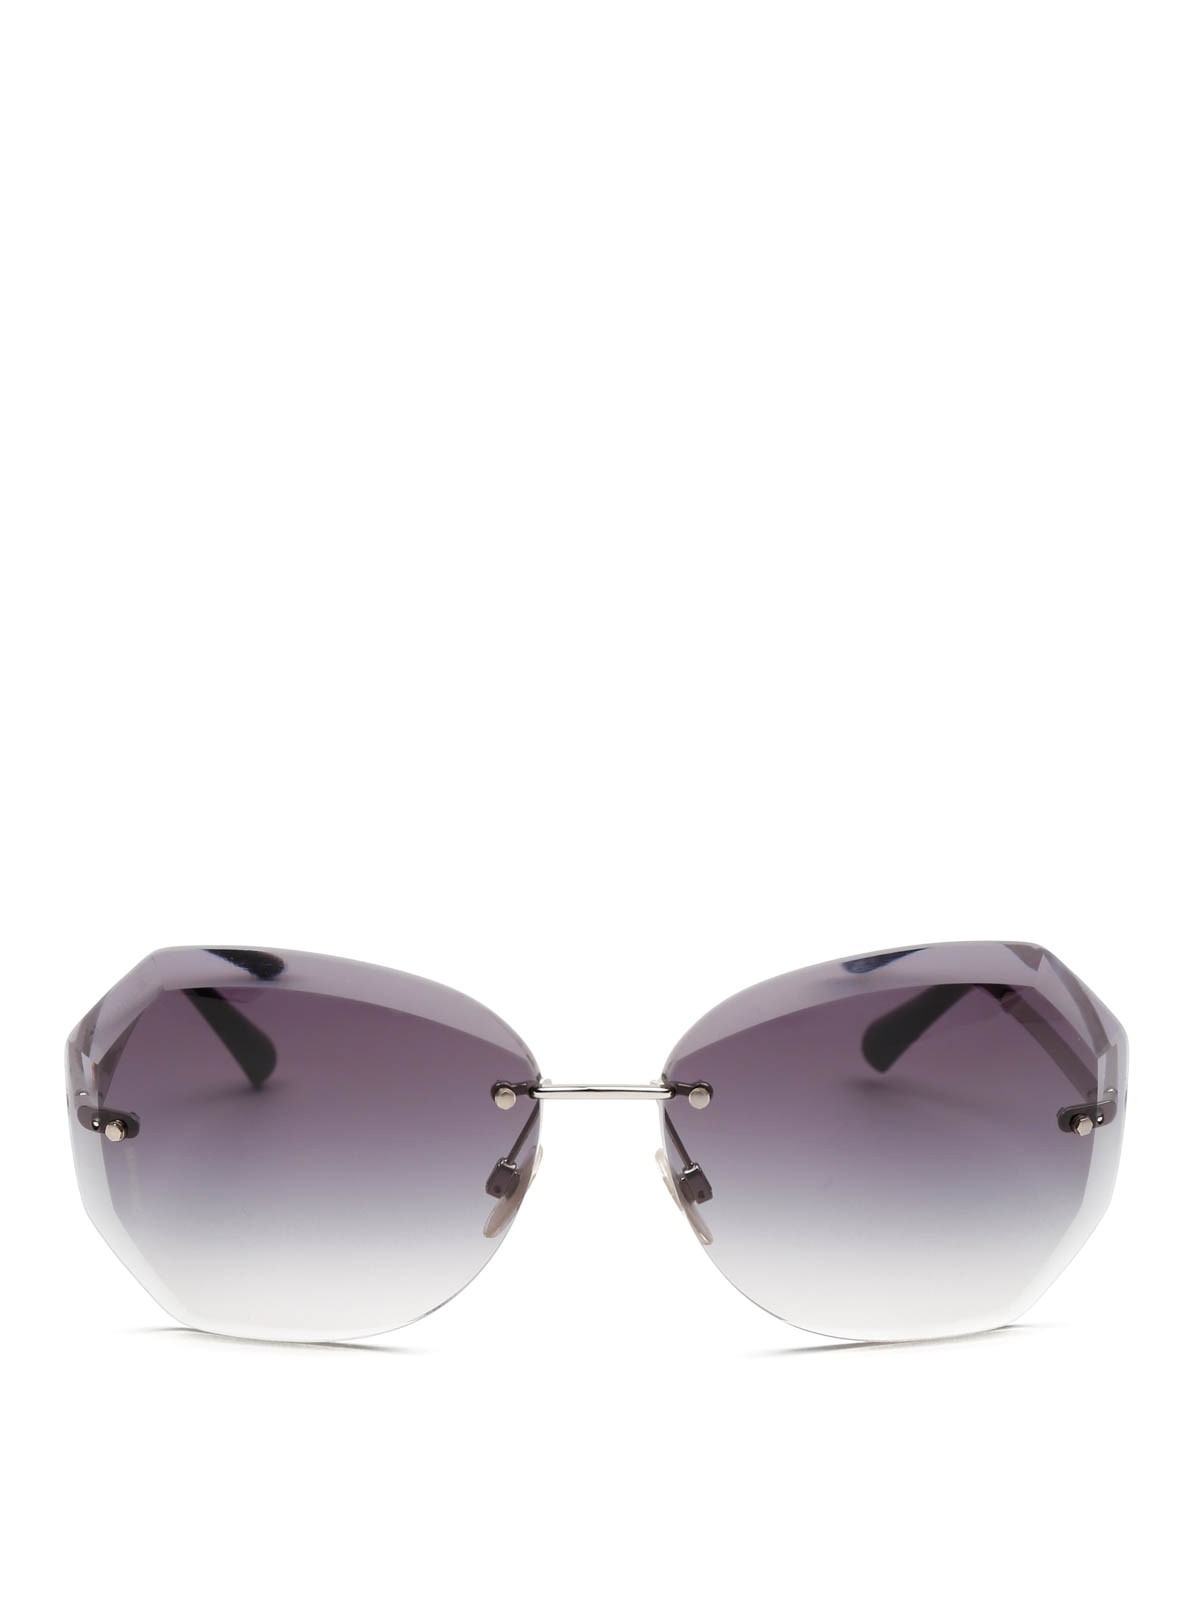 Sunglasses Chanel - Rimless round sunglasses - CH4220C1243C